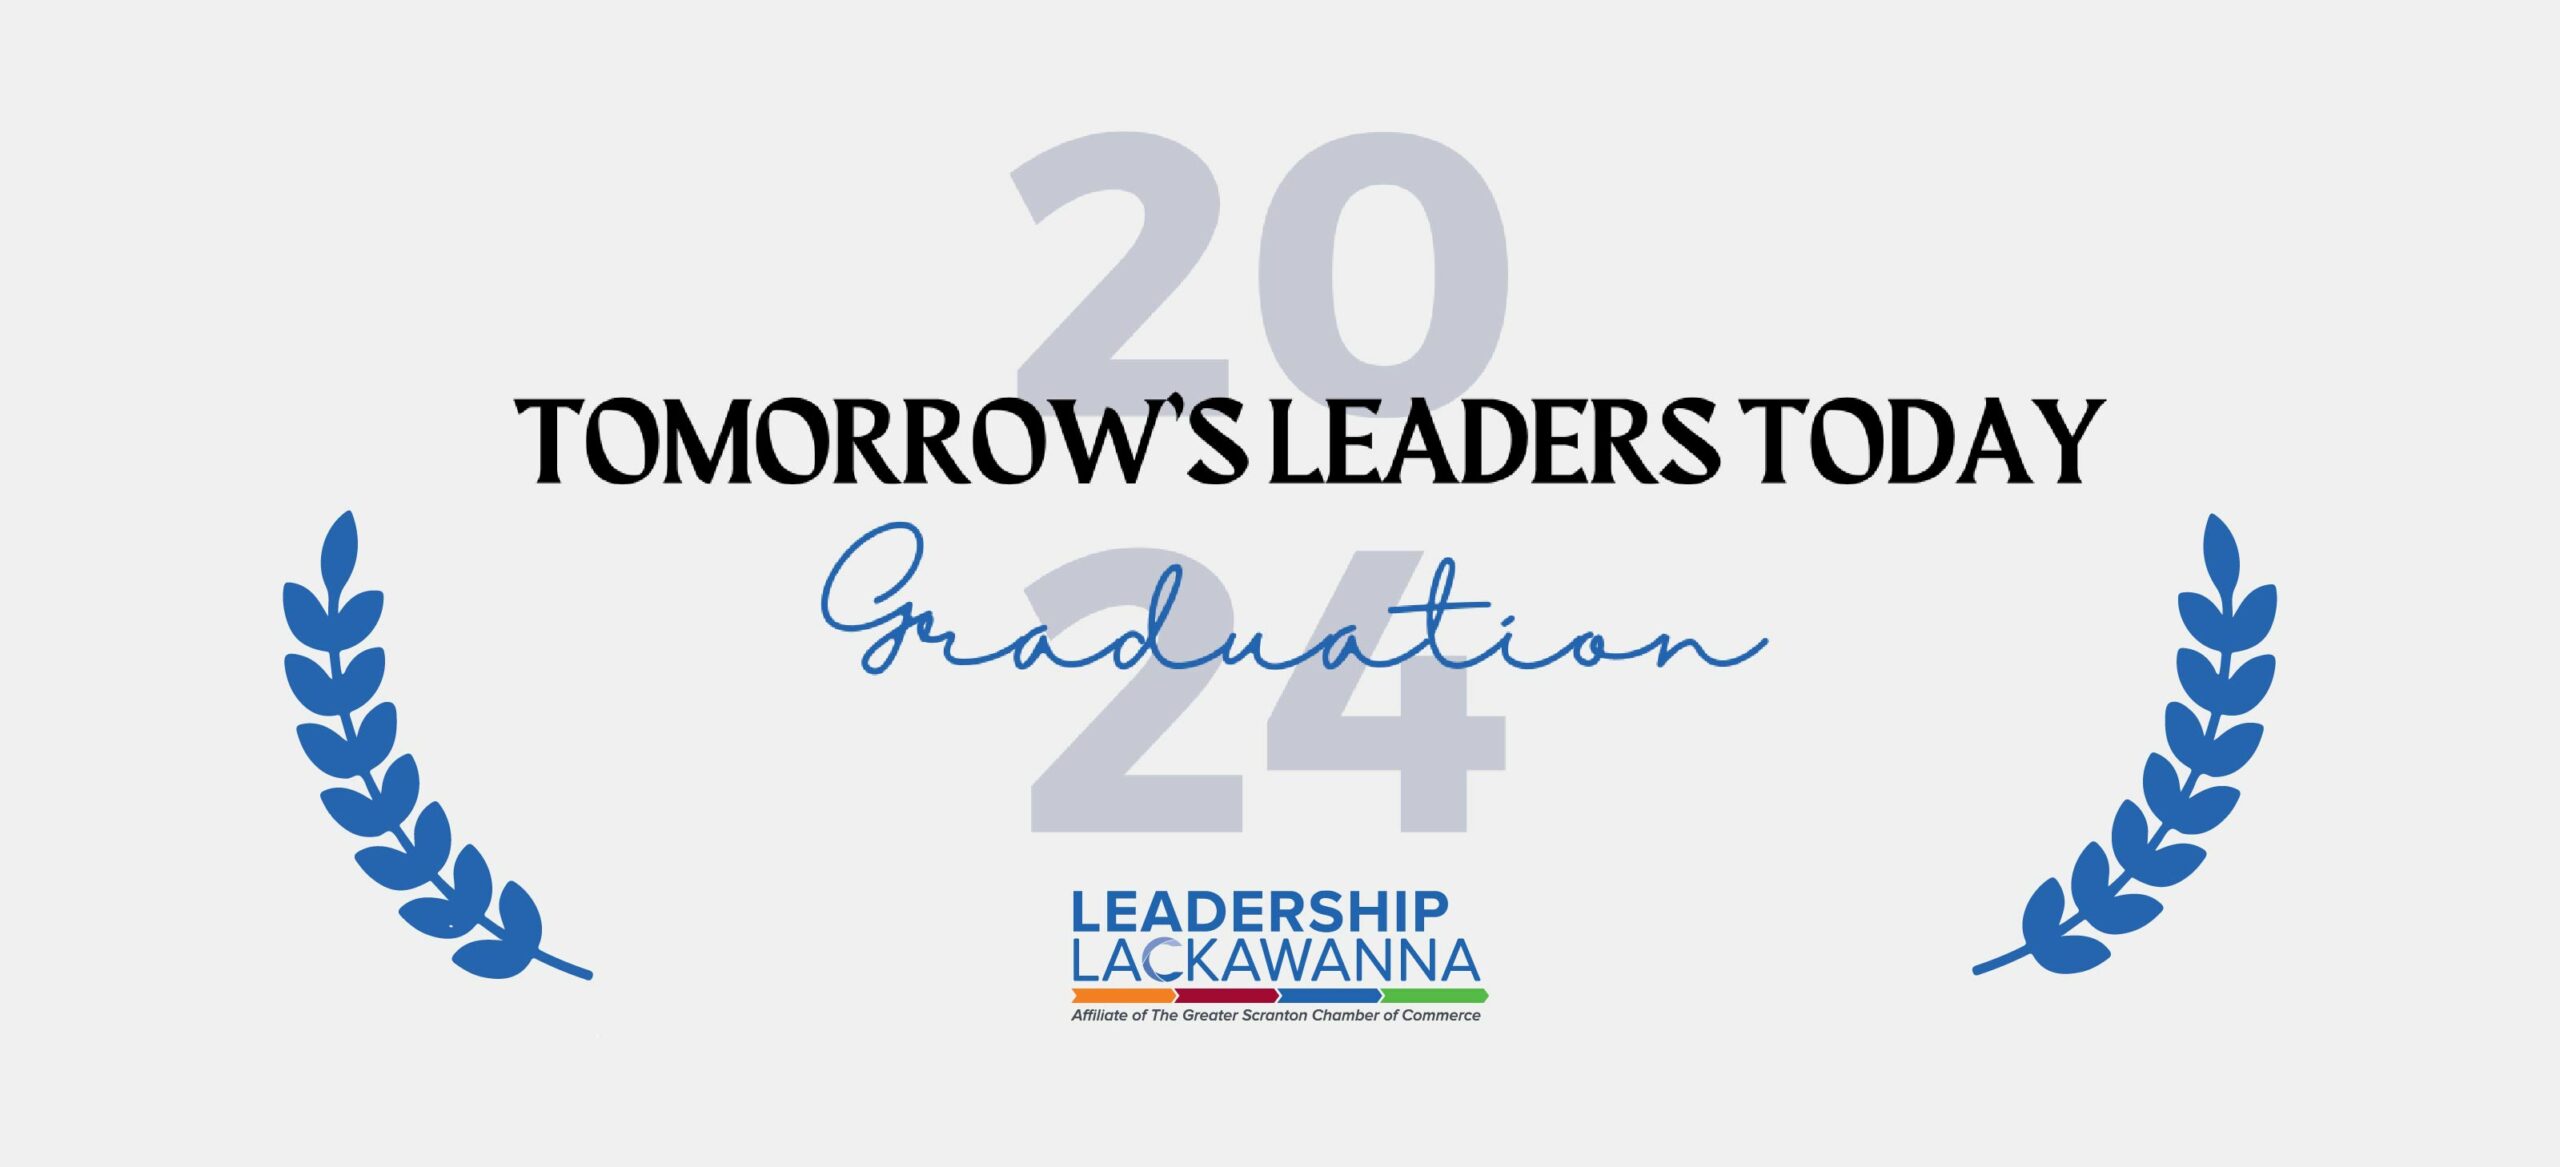 Leadership Lackawanna Tomorrow's Leaders Today Graduation